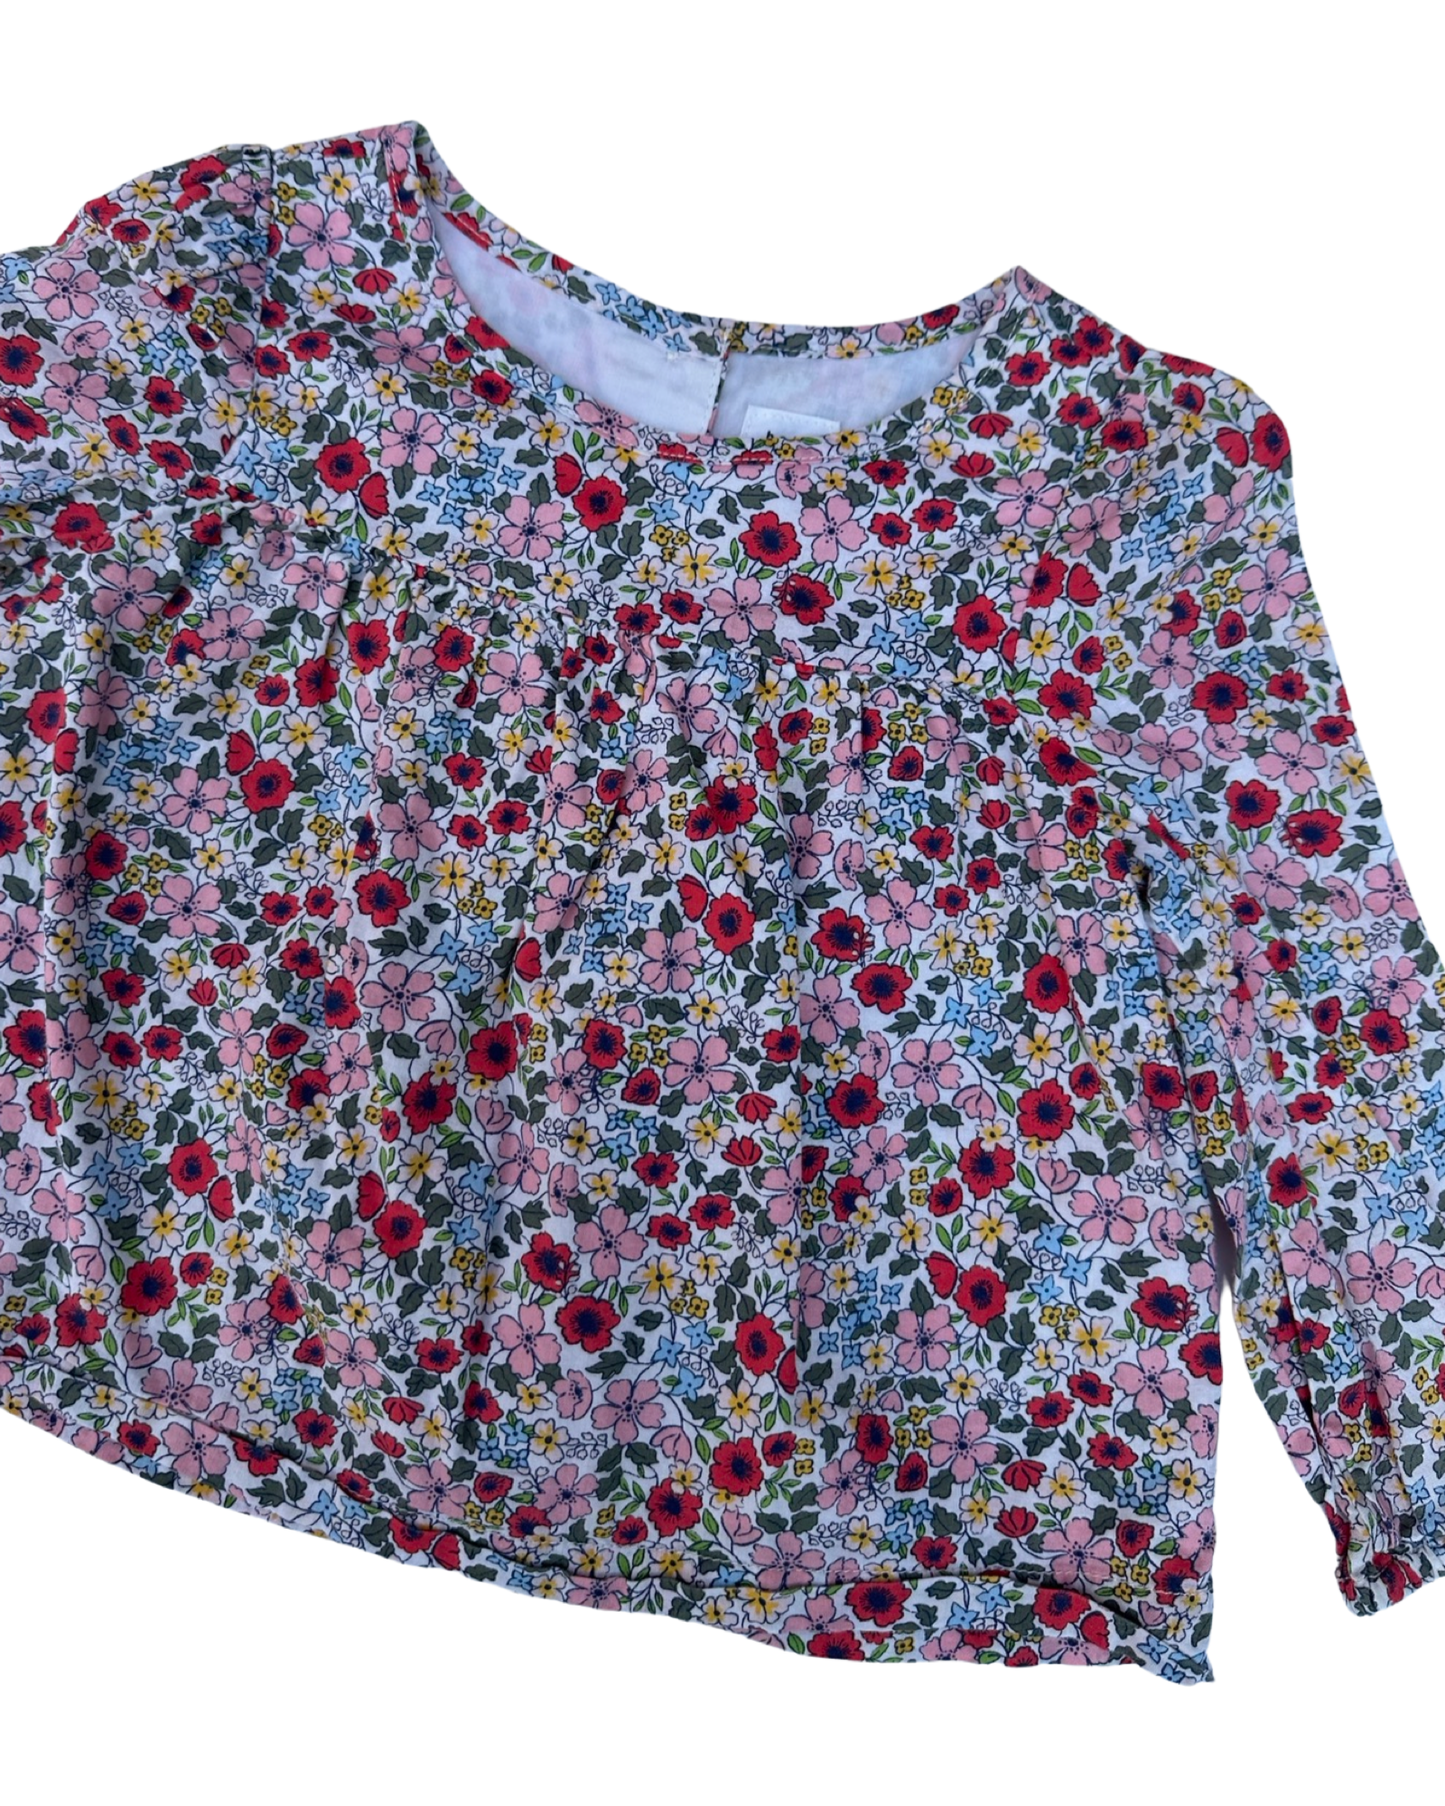 Baby Gap floral cotton blouse (size 12-18mths)